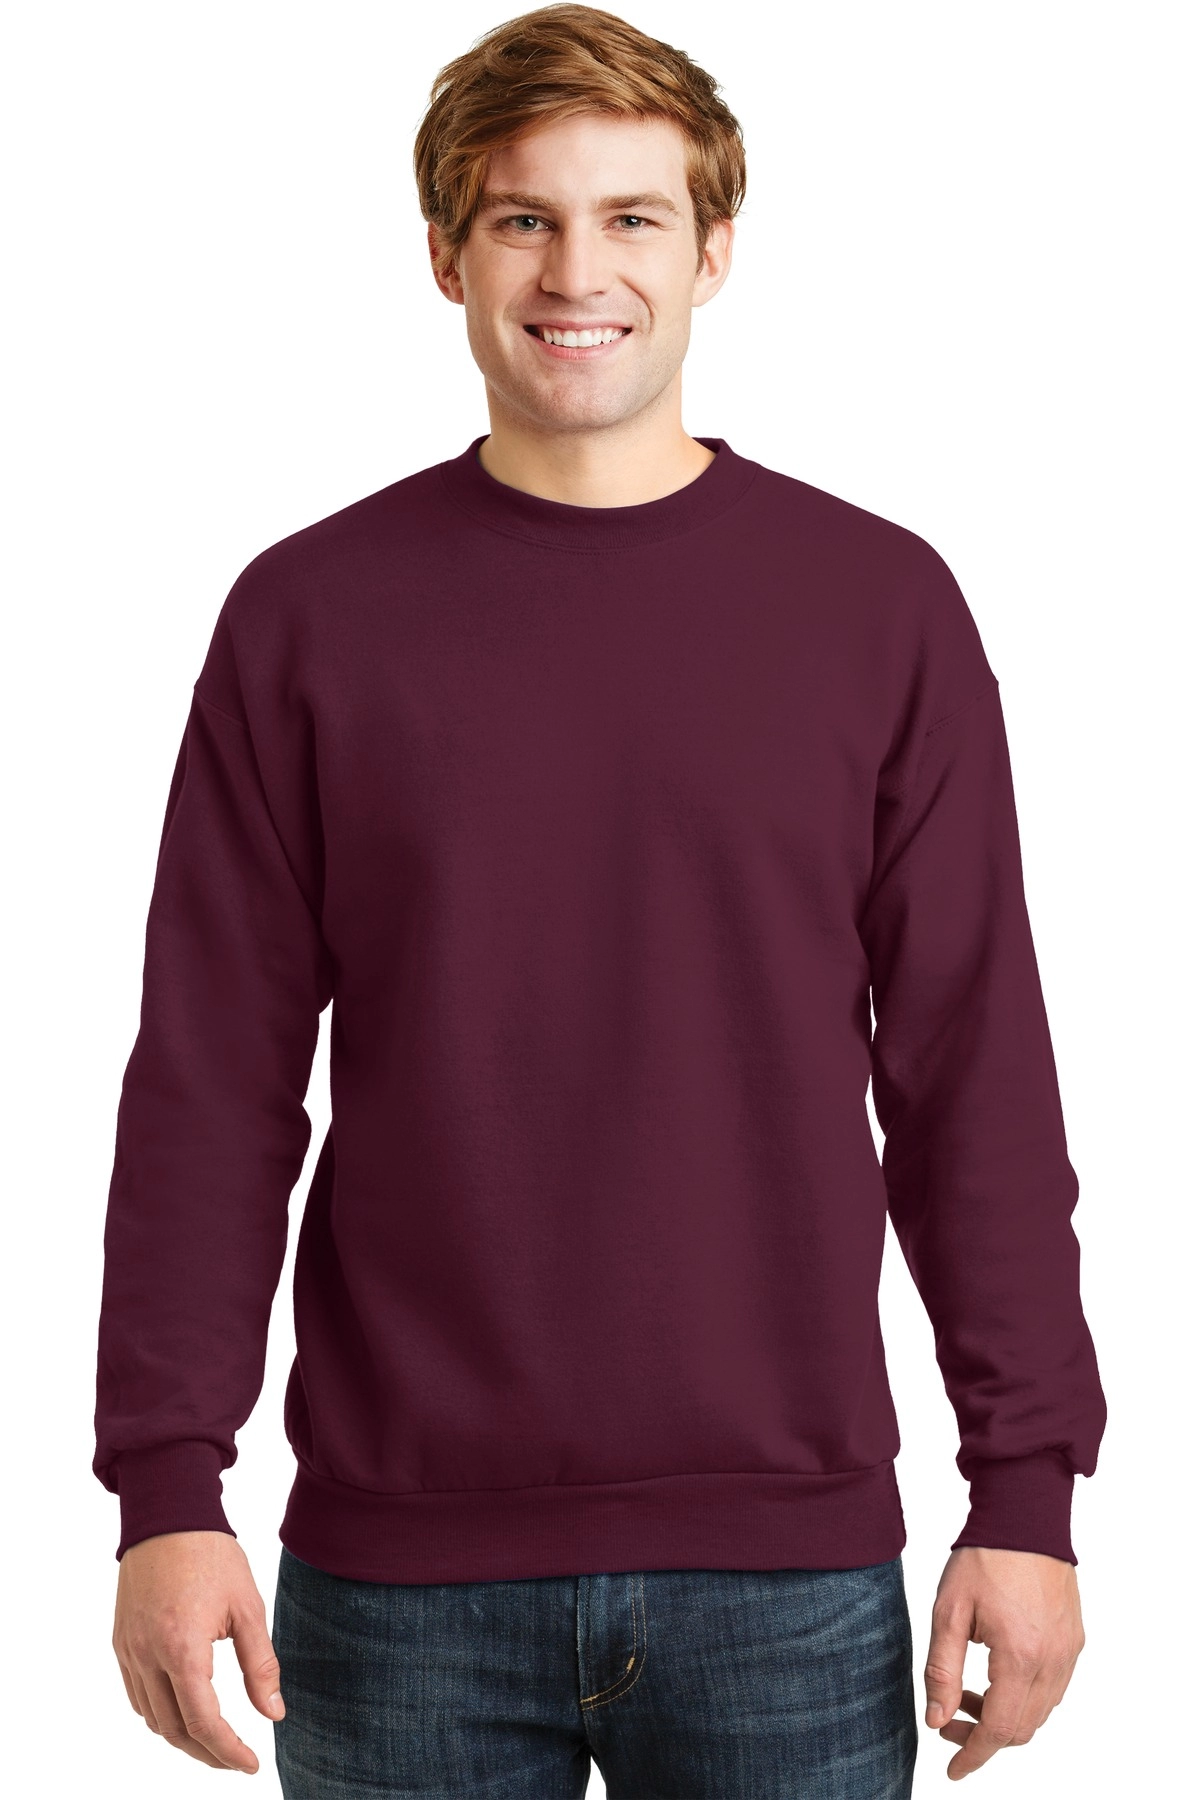 Hanes Ecosmart Men's Fleece Sweatshirt Army Brown 3XL